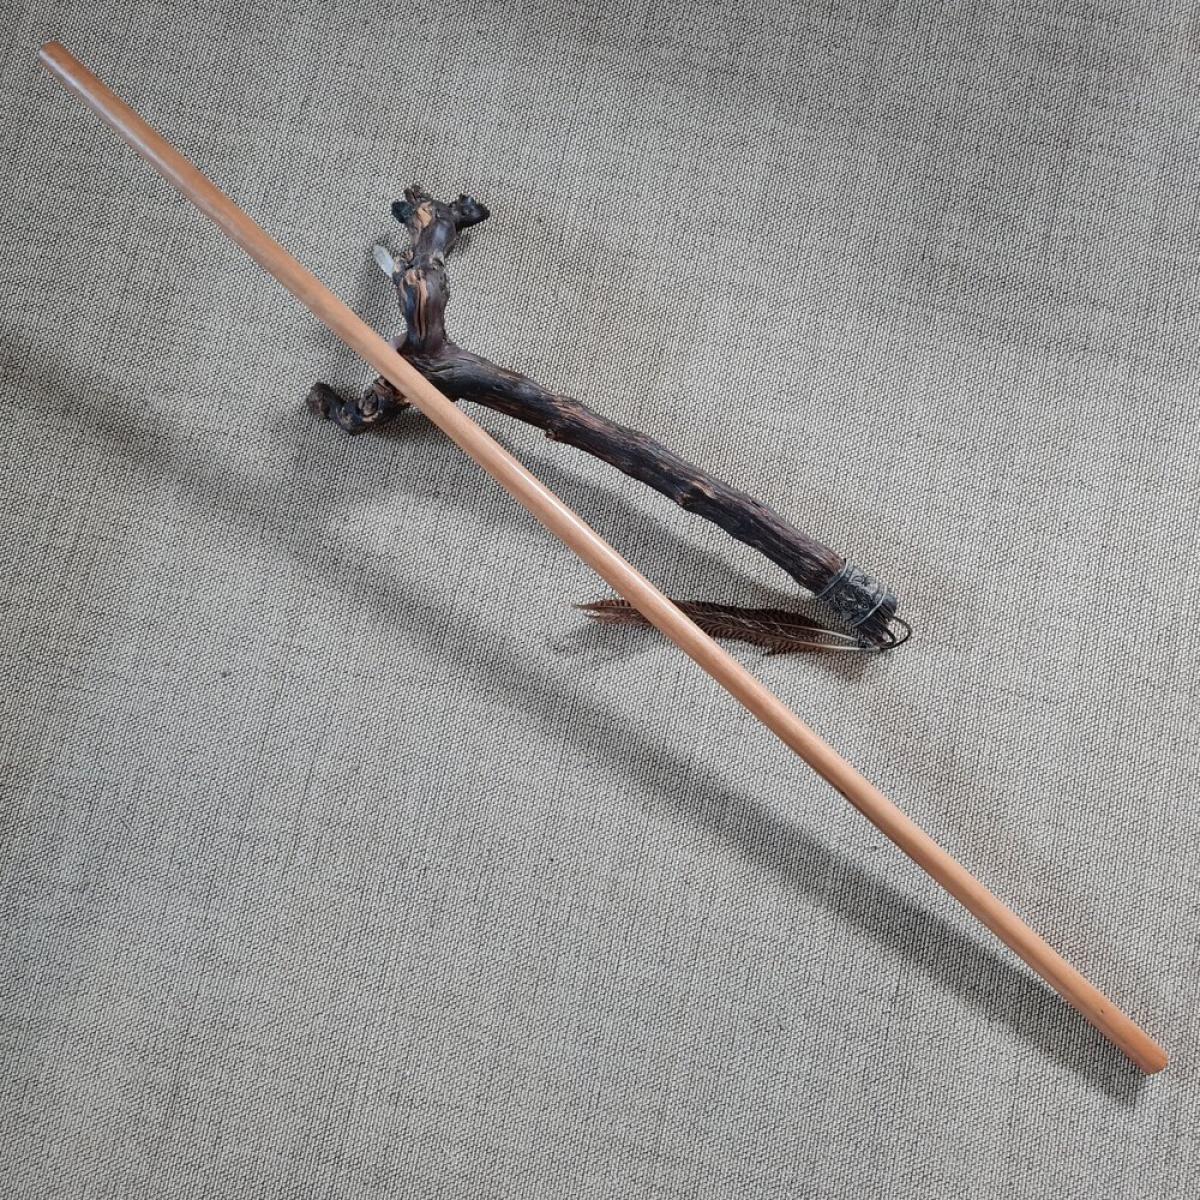 Jo-Stab aus Ghio-Holz - Länge 135 cm ➤ www.bokken-shop.de. Passend für Aikido, Iaido, Jo-Jutsu, Jodo, Bujinkan. Dein Budo-Fachhändler!